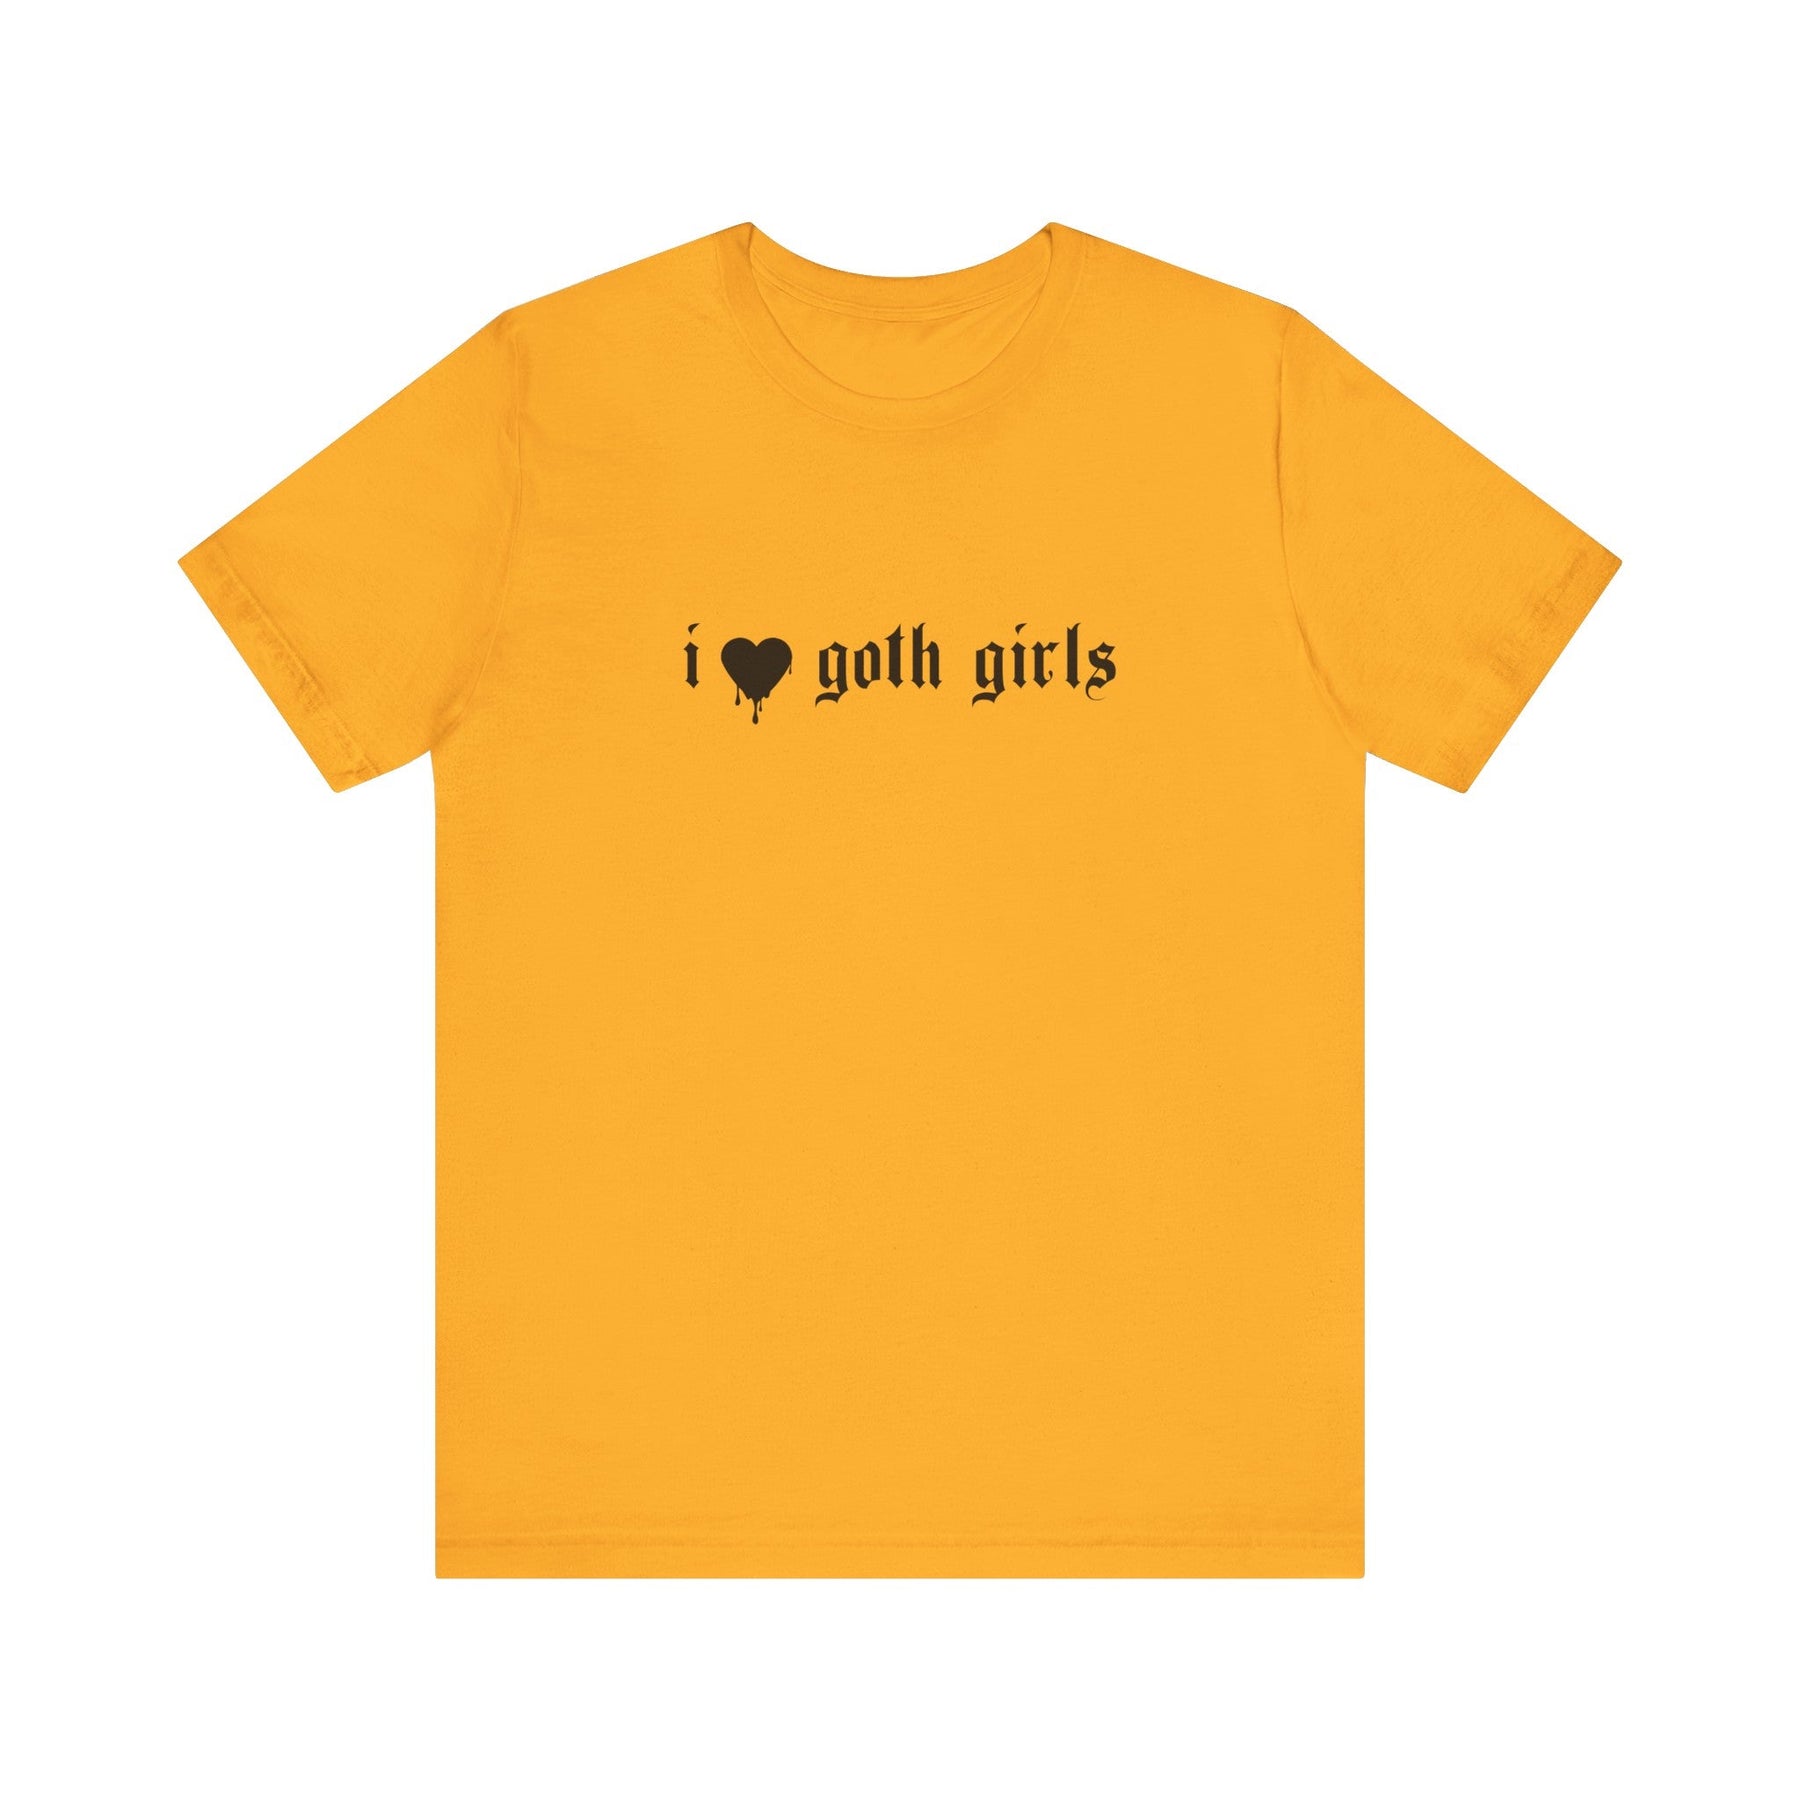 I Love Goth Girls T - Shirt - Goth Cloth Co.T - Shirt13252521346103087225